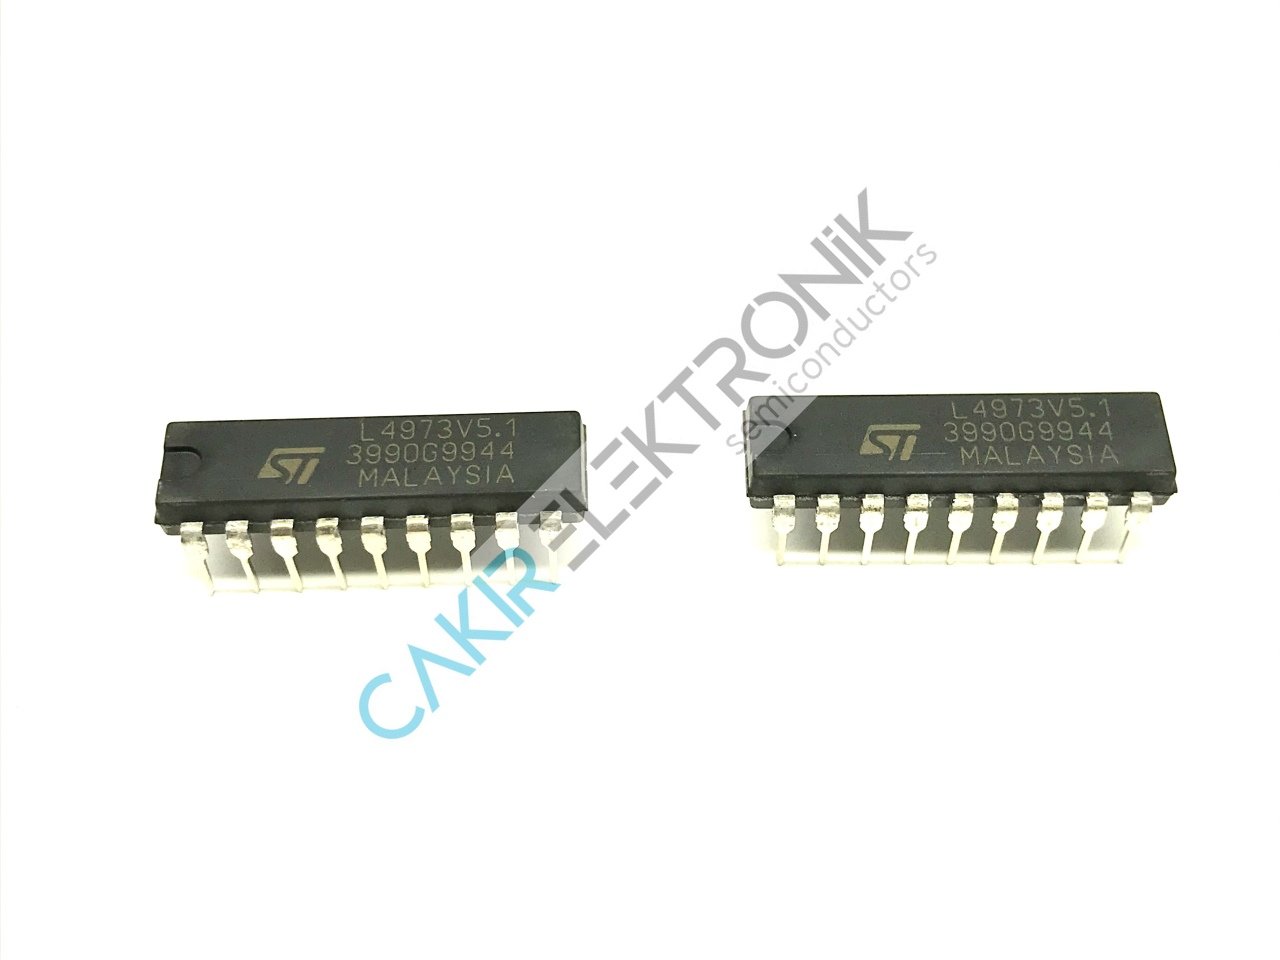 L4973V5.1 - L4973 - L4973V5,1  3.5 A step down switching regulator